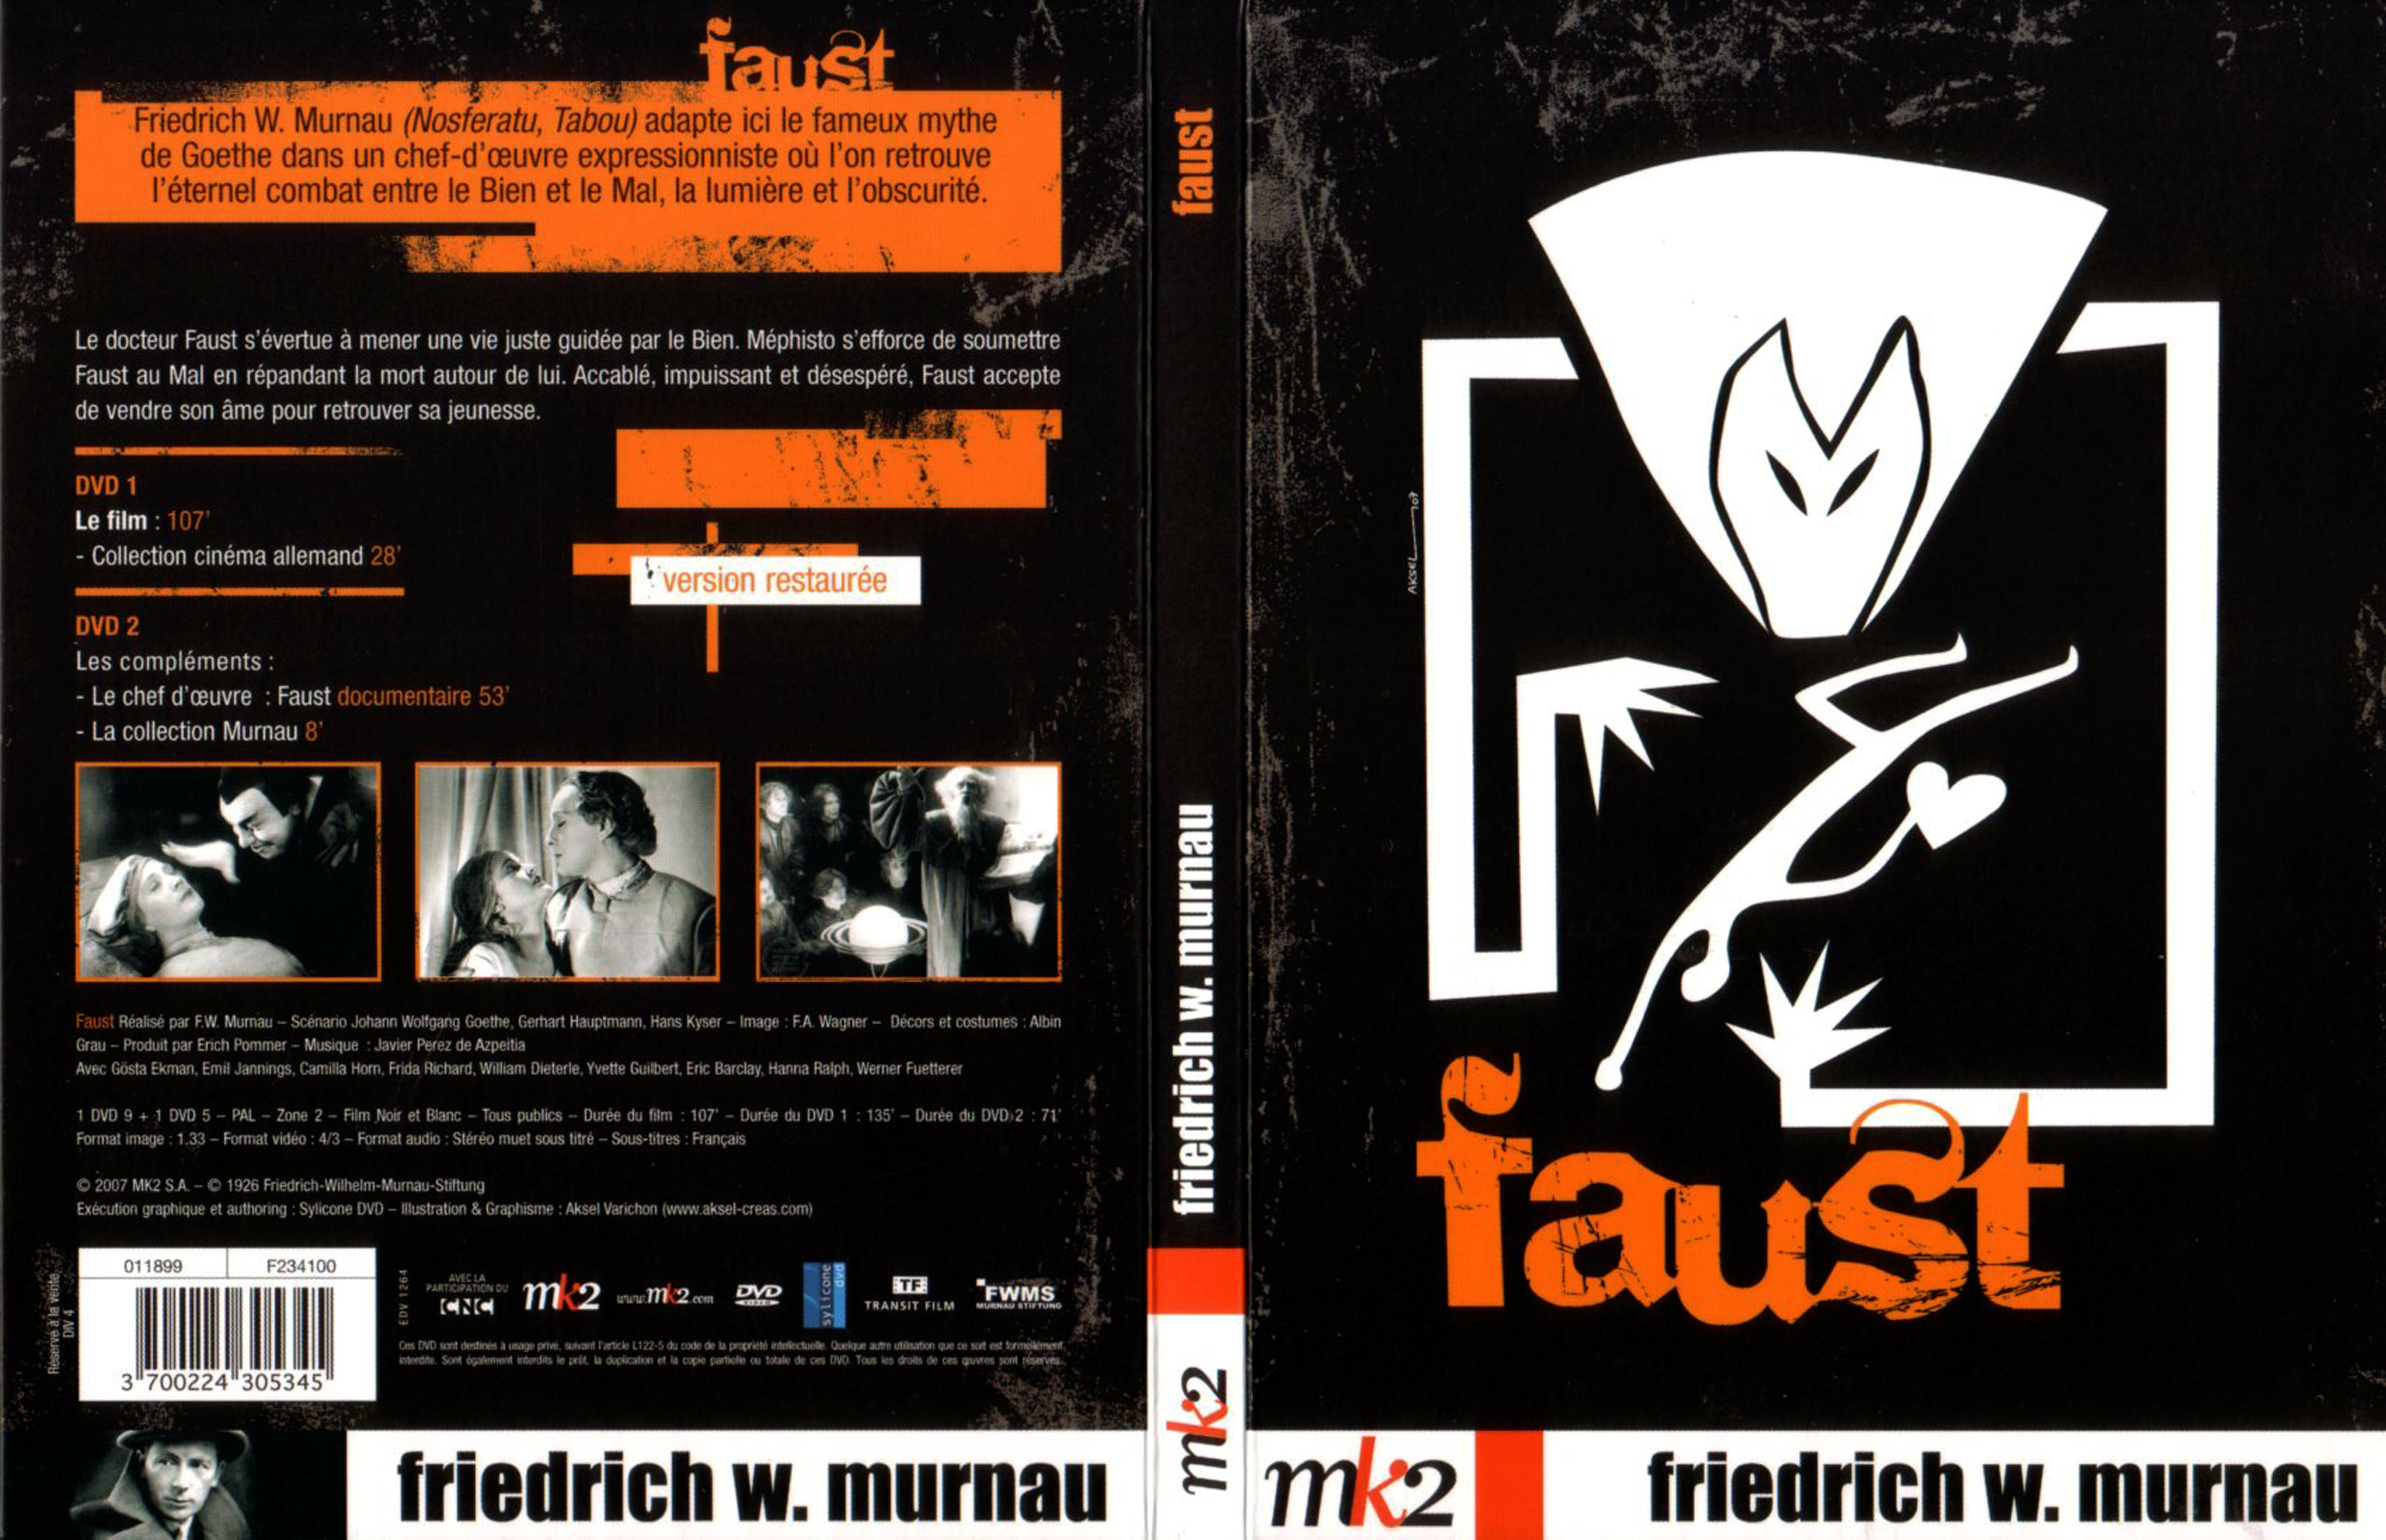 Jaquette DVD Faust (1926) v2